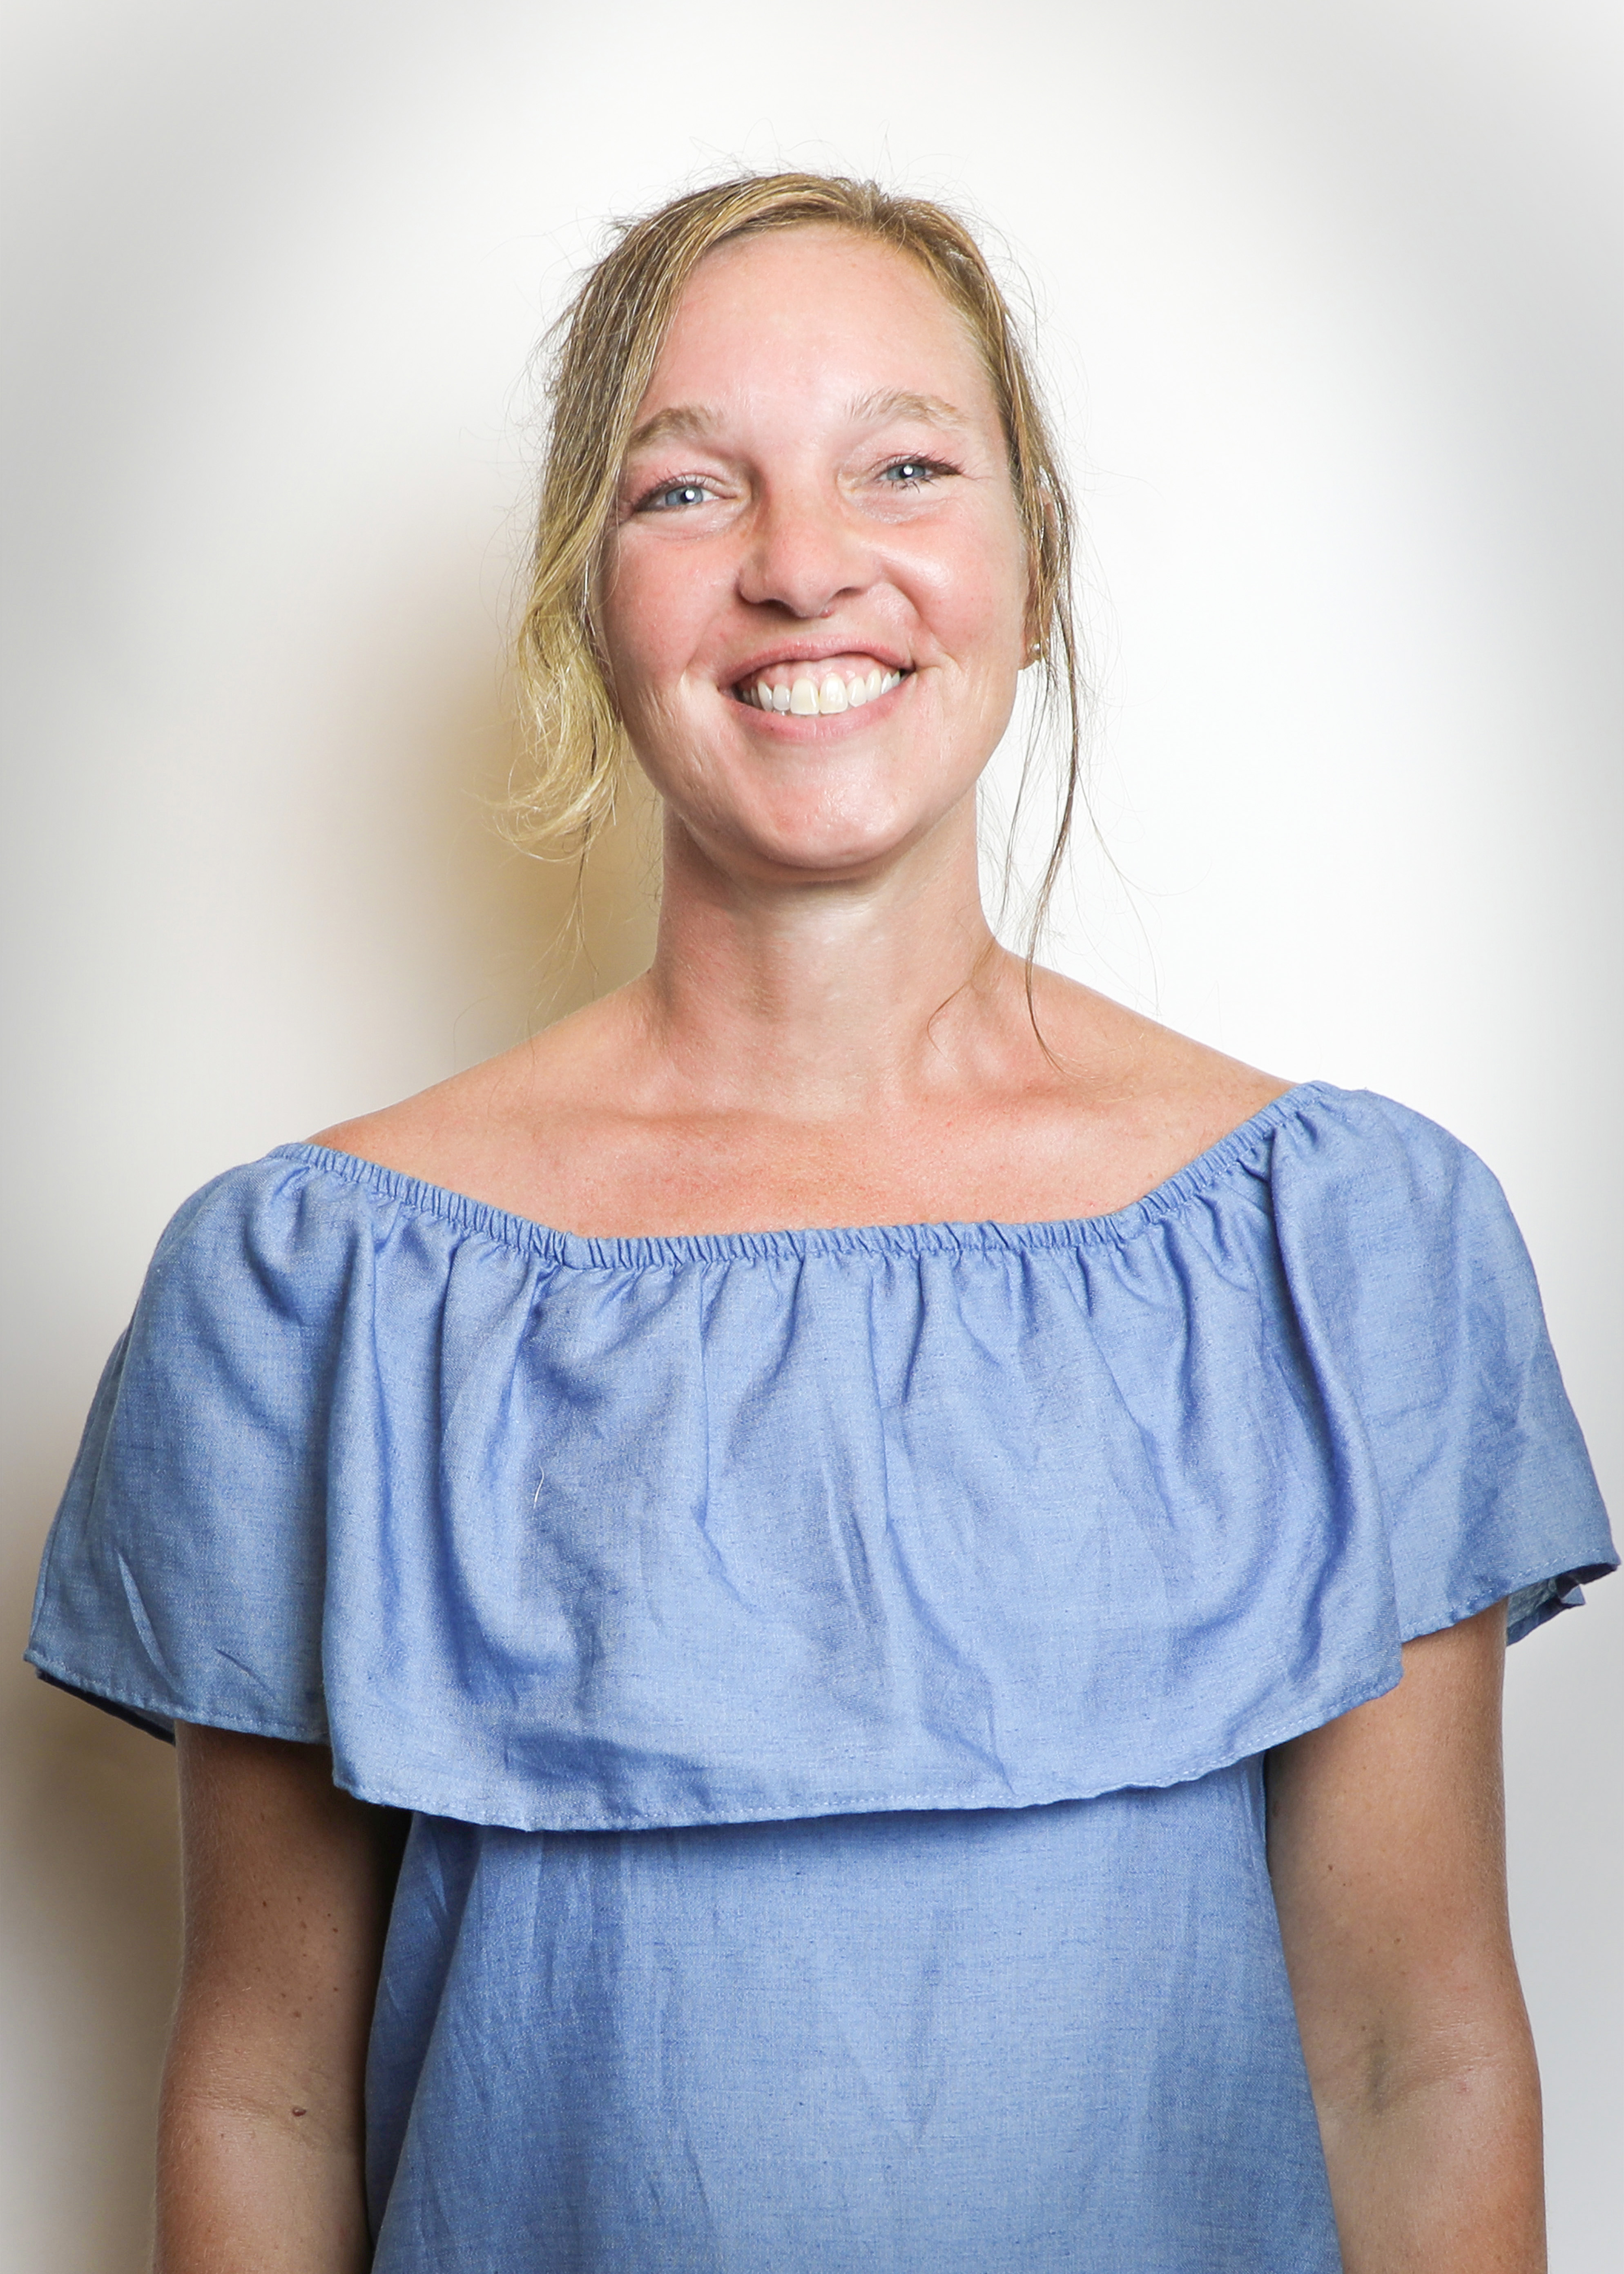 Colleen Kumiega, Hilbert Chair of Behavioral Health